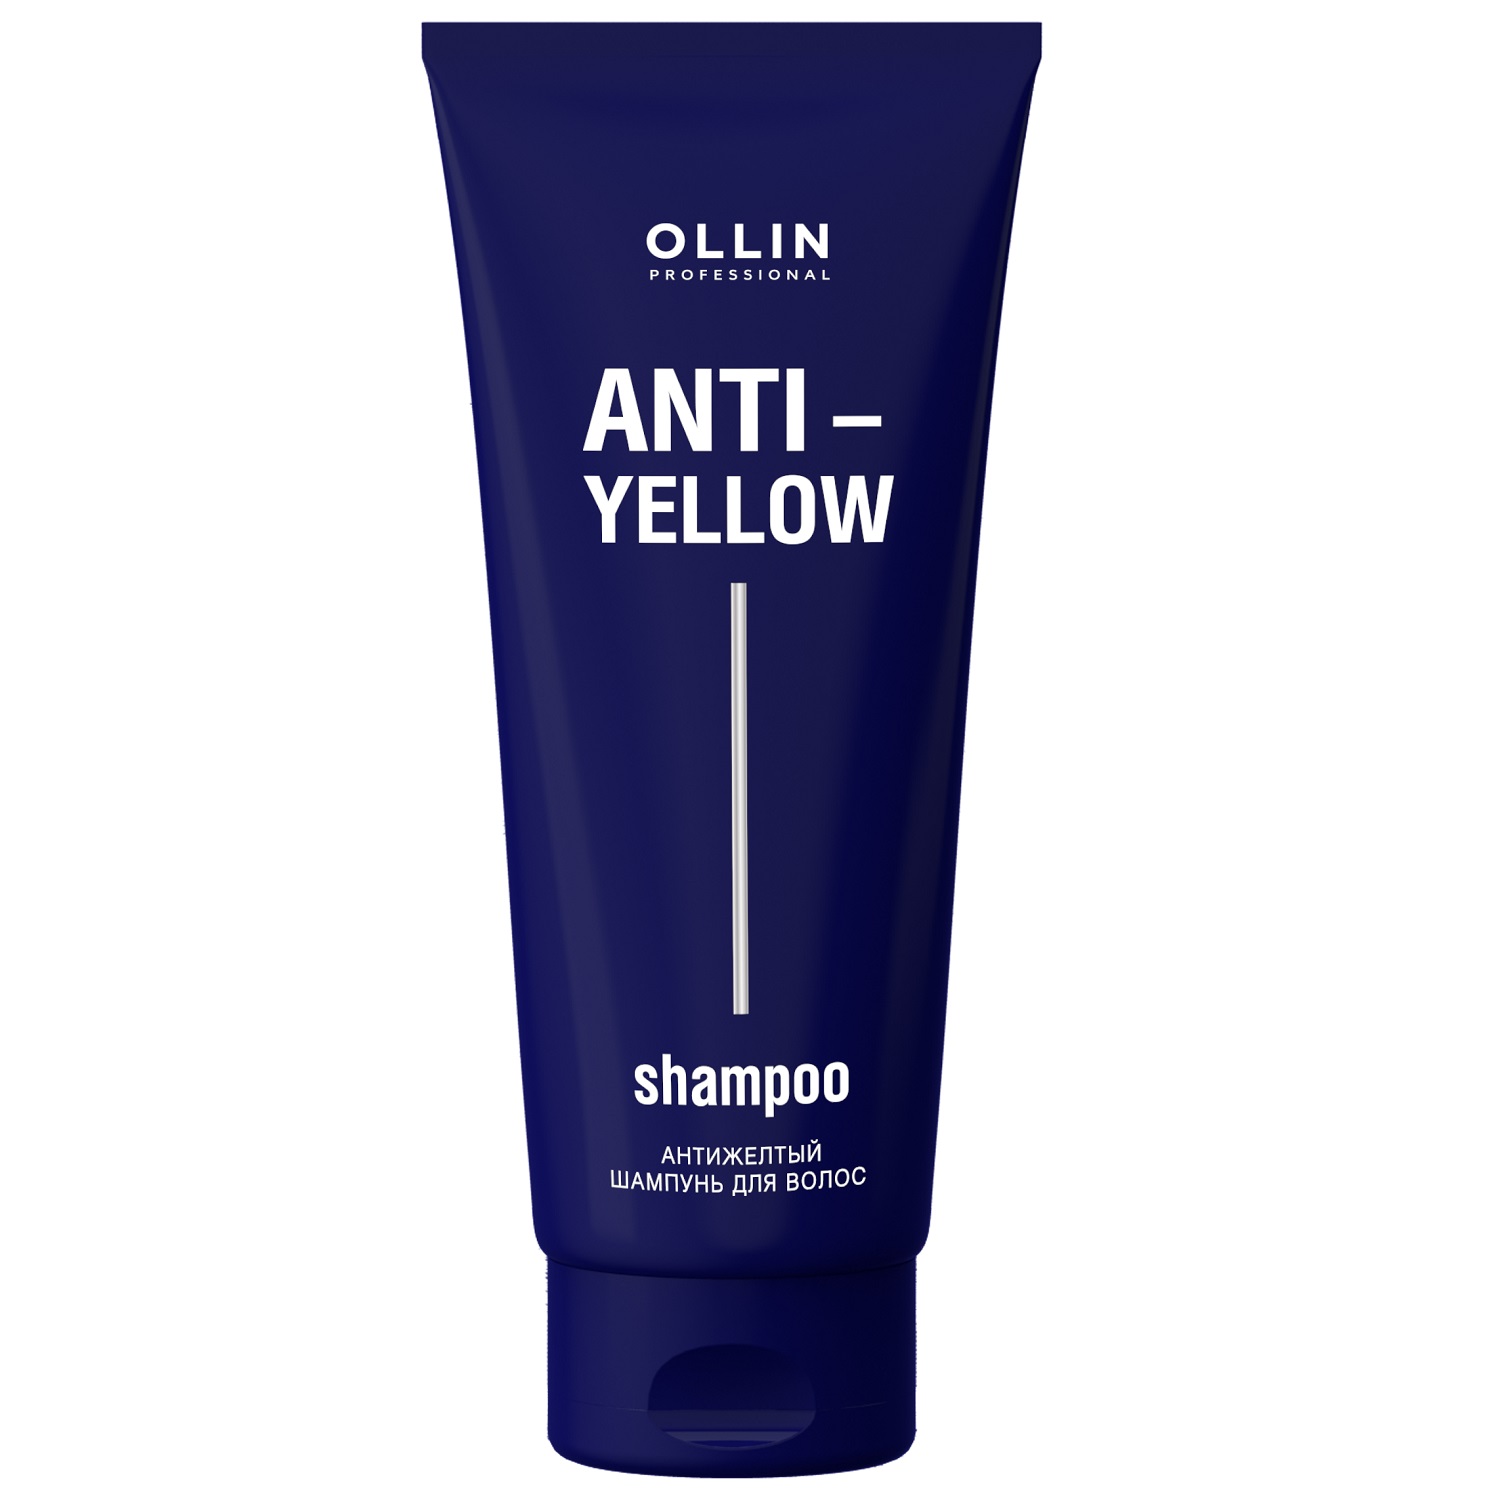 Ollin Professional Антижелтый шампунь для волос Anti-Yellow Shampoo, 250 мл (Ollin Professional, Anti-Yellow)